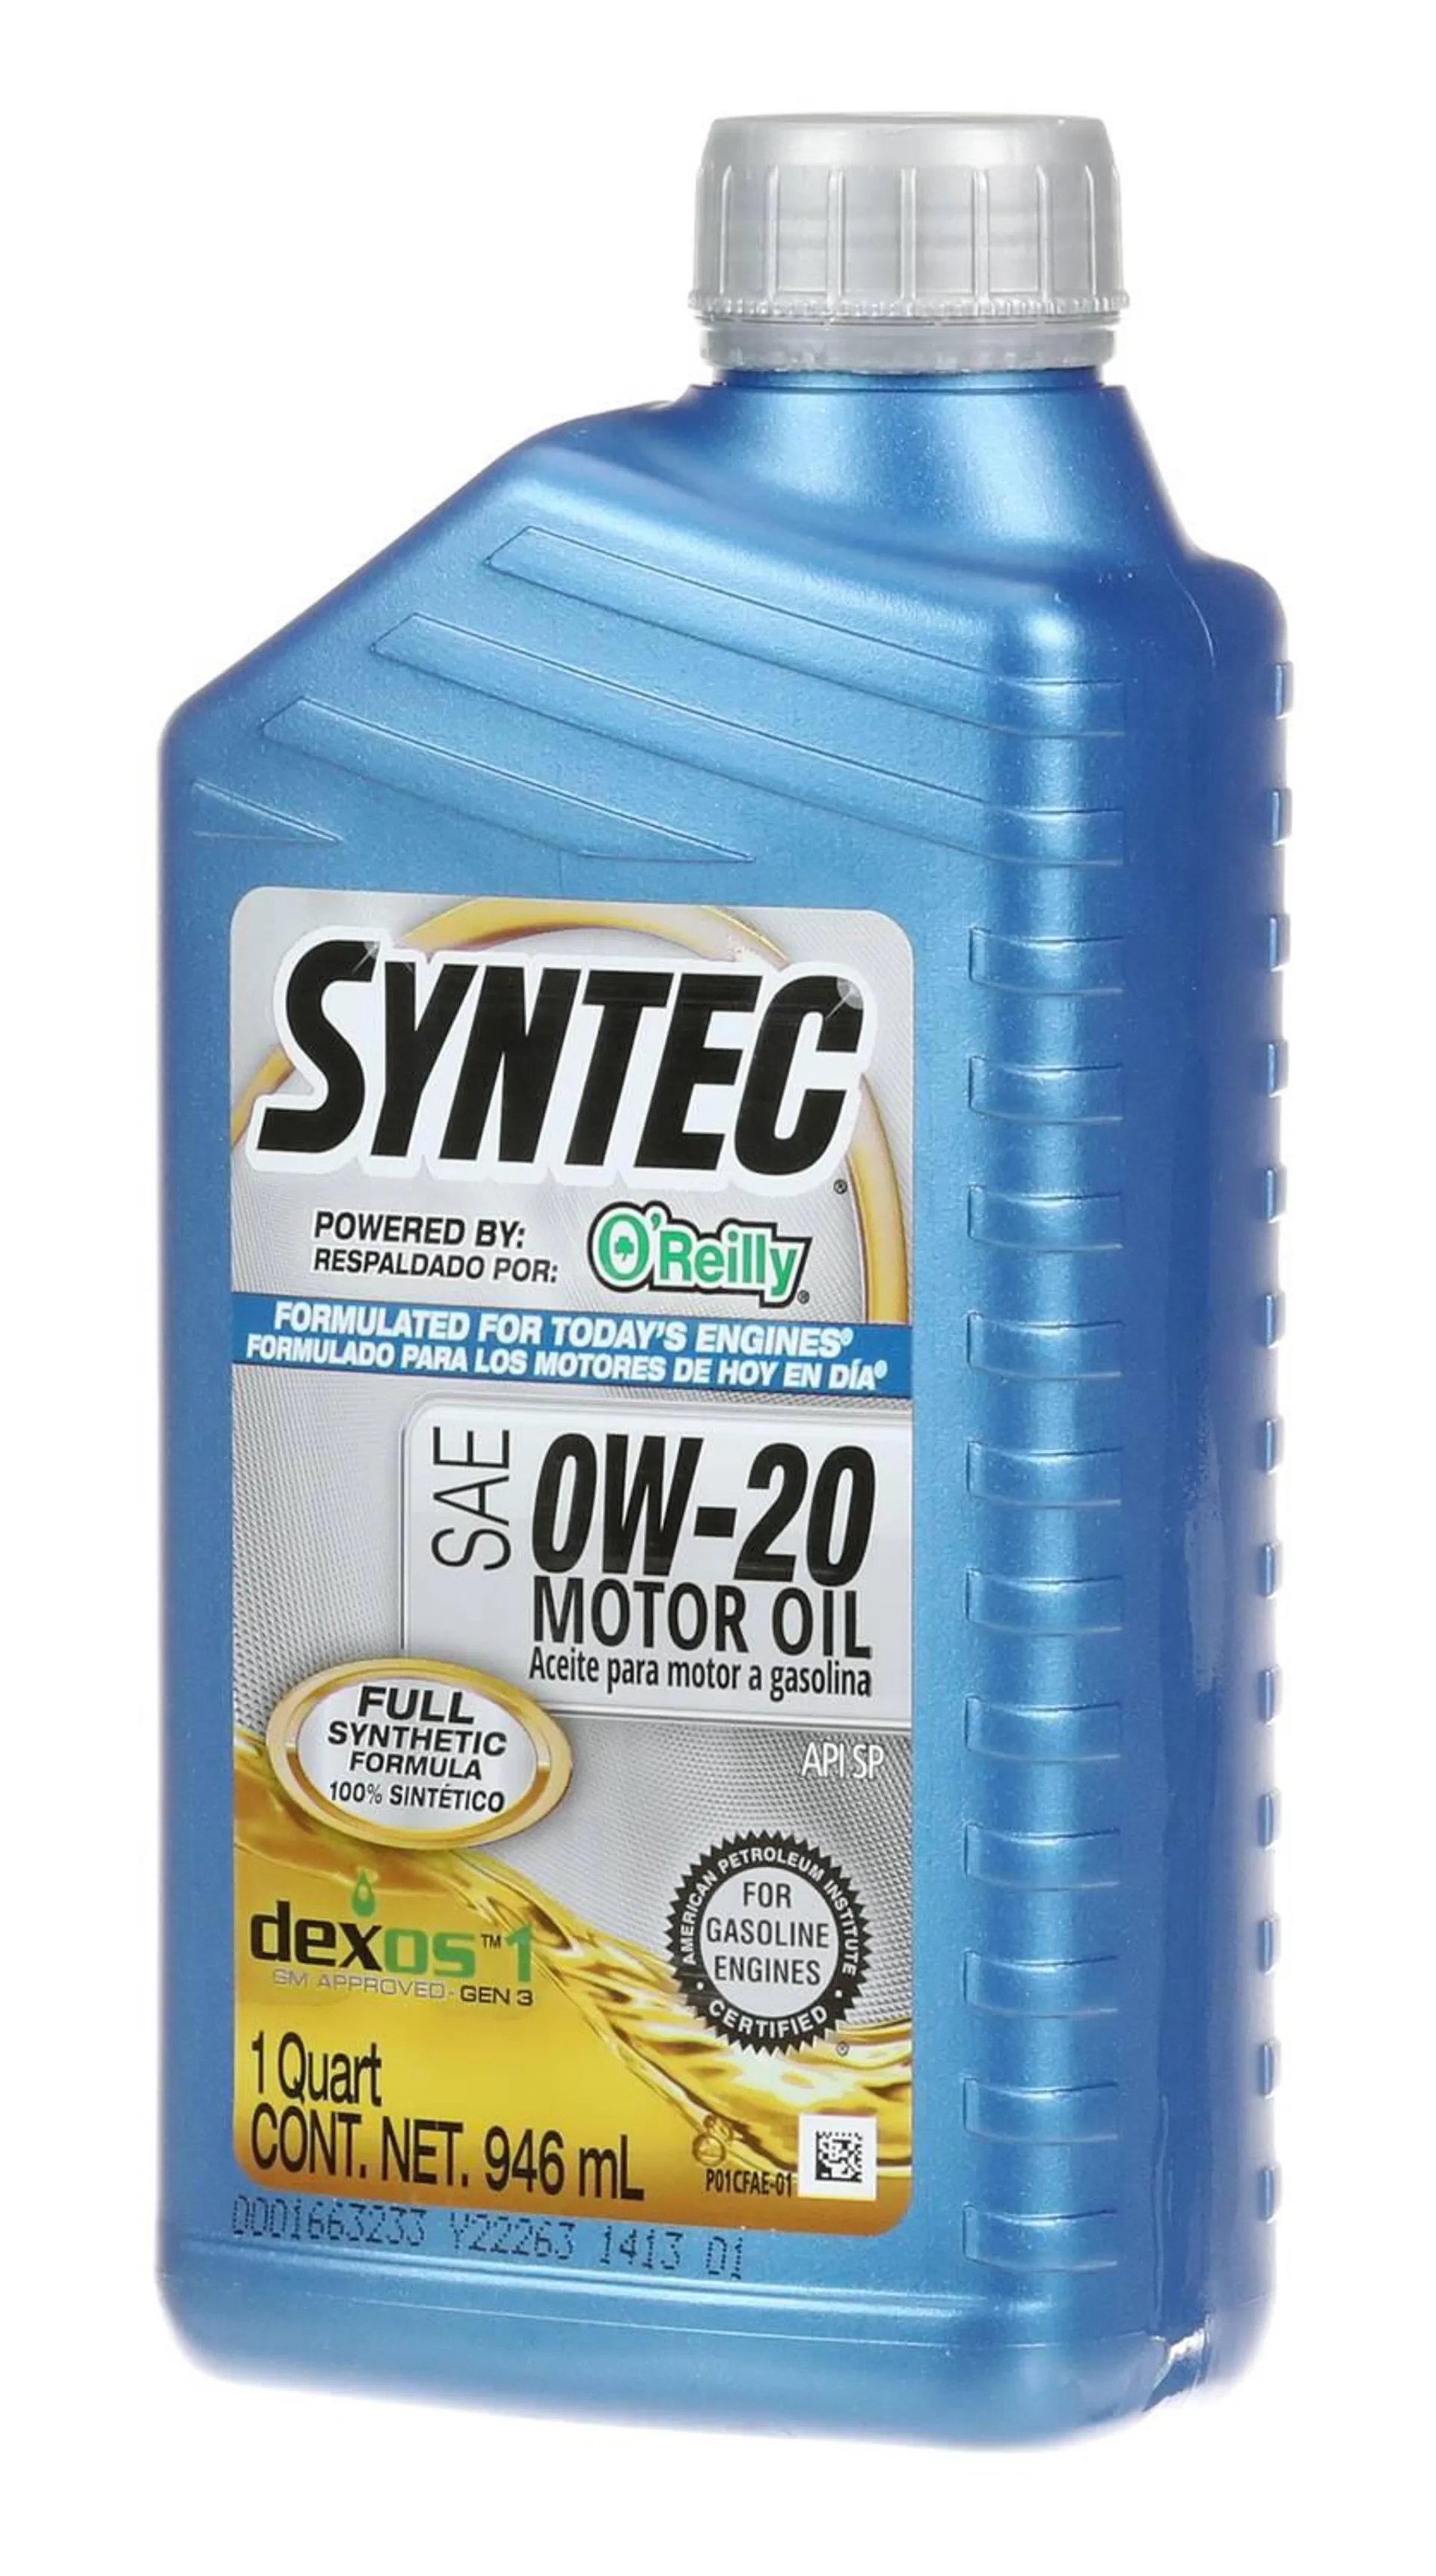 SYNTEC Full Synthetic Motor Oil 0W-20 1 Quart - SYN0-20